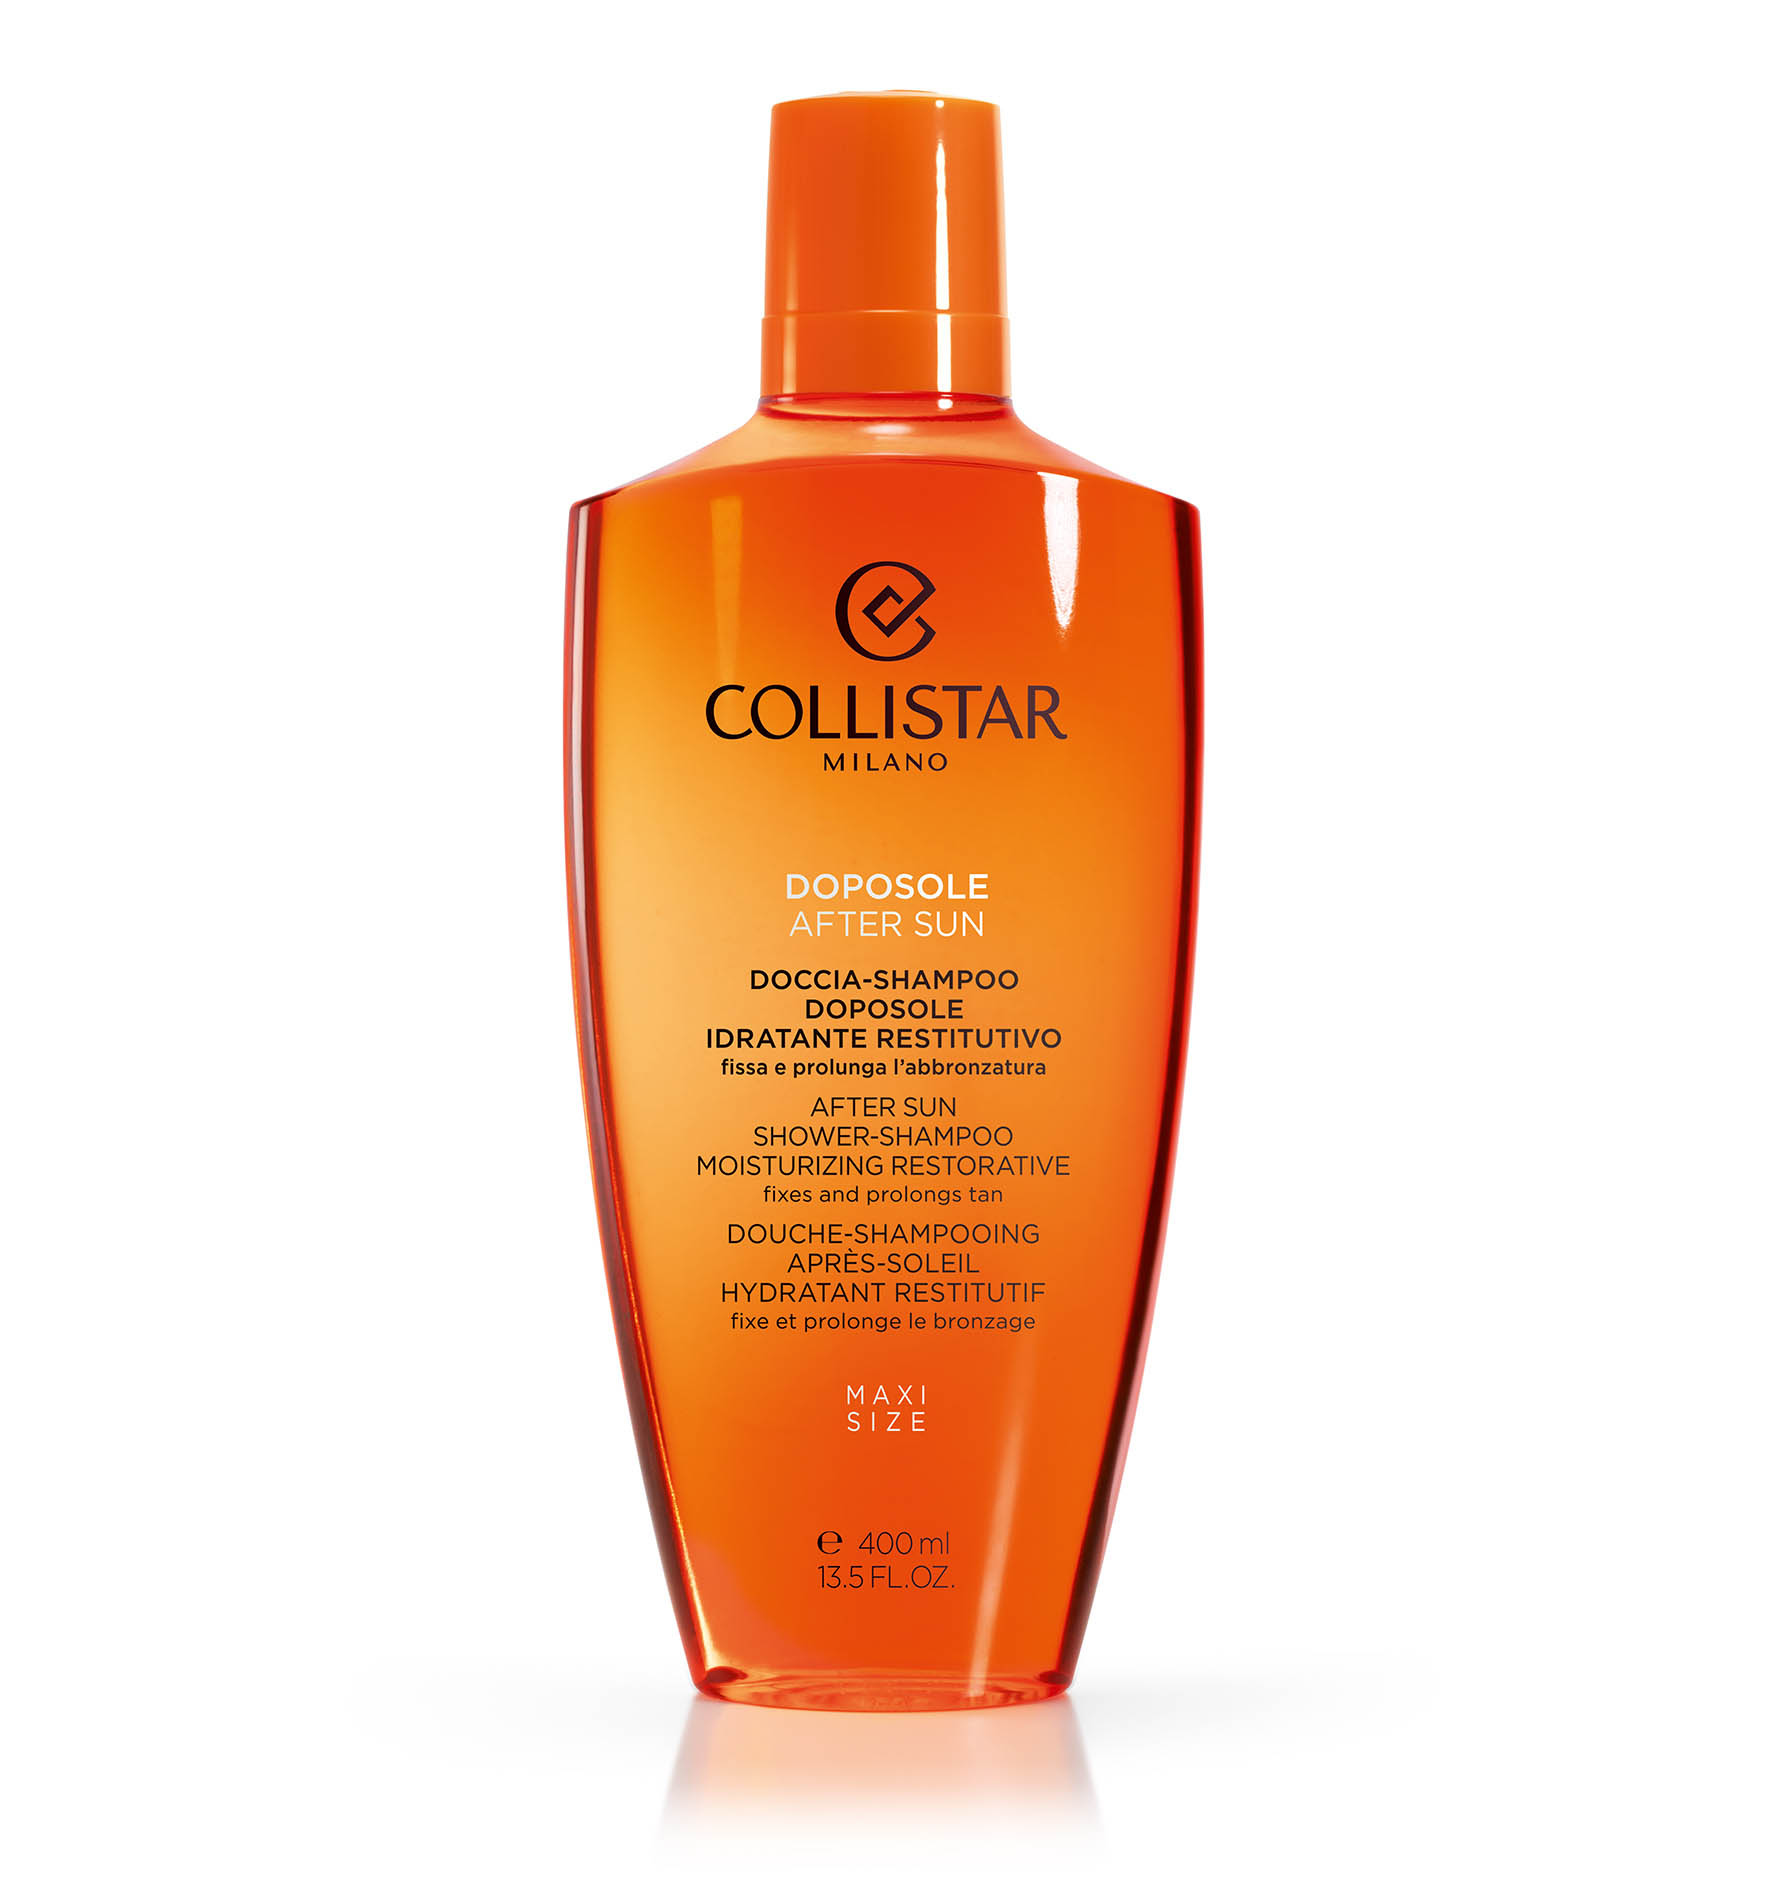 AFTER SUN SHOWER-SHAMPOO MOISTURIZING RESTORATIVE - Hair | Collistar - Shop Online Ufficiale